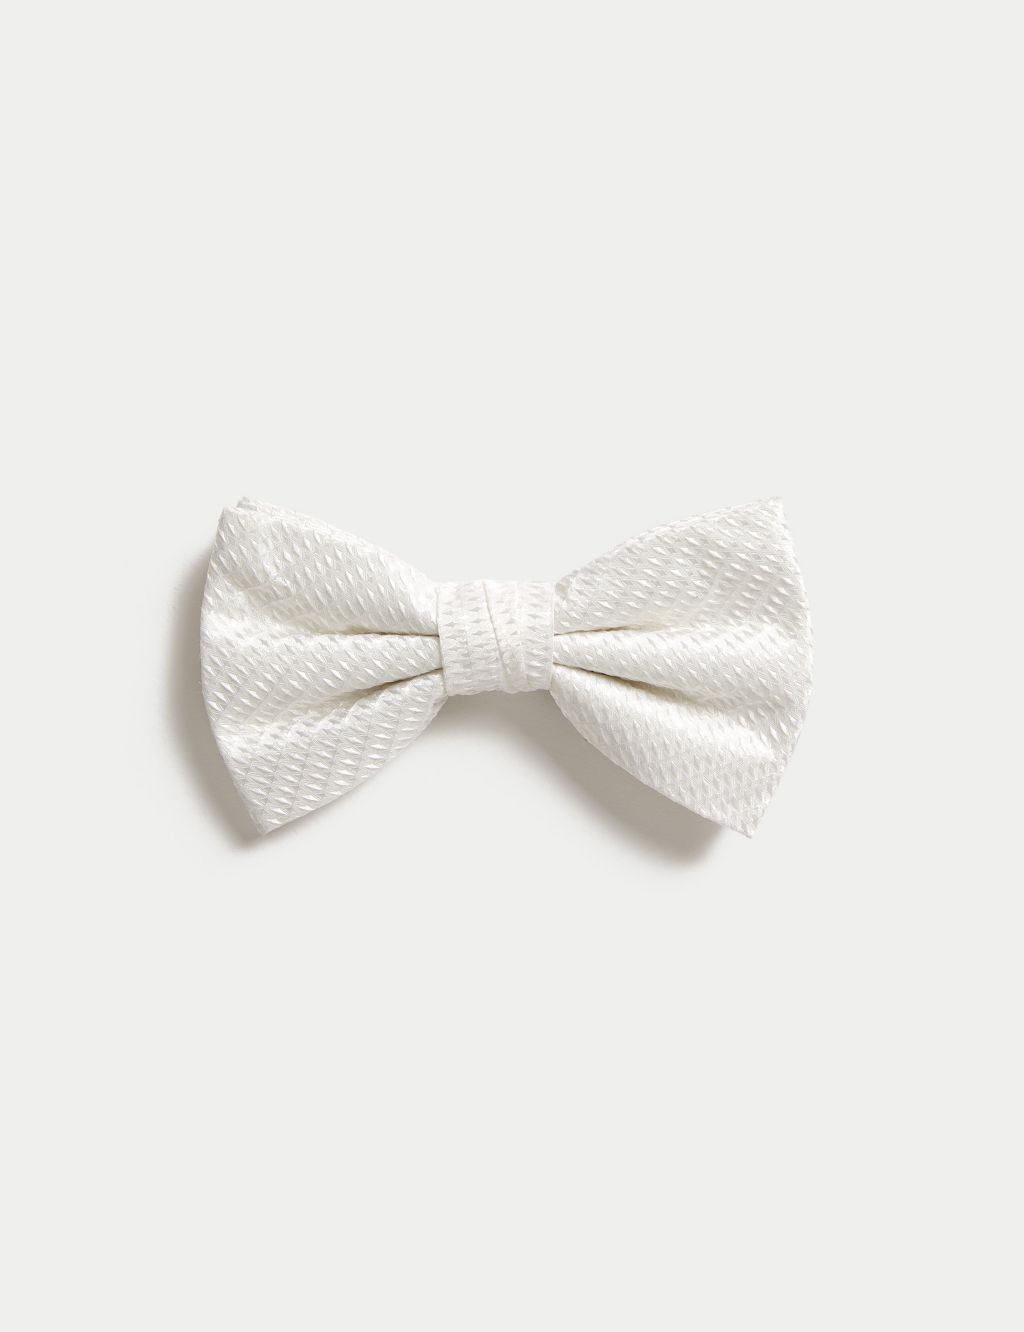 Louis Vuitton Silk Monogram Bow Tie - Black Bow Ties, Suiting